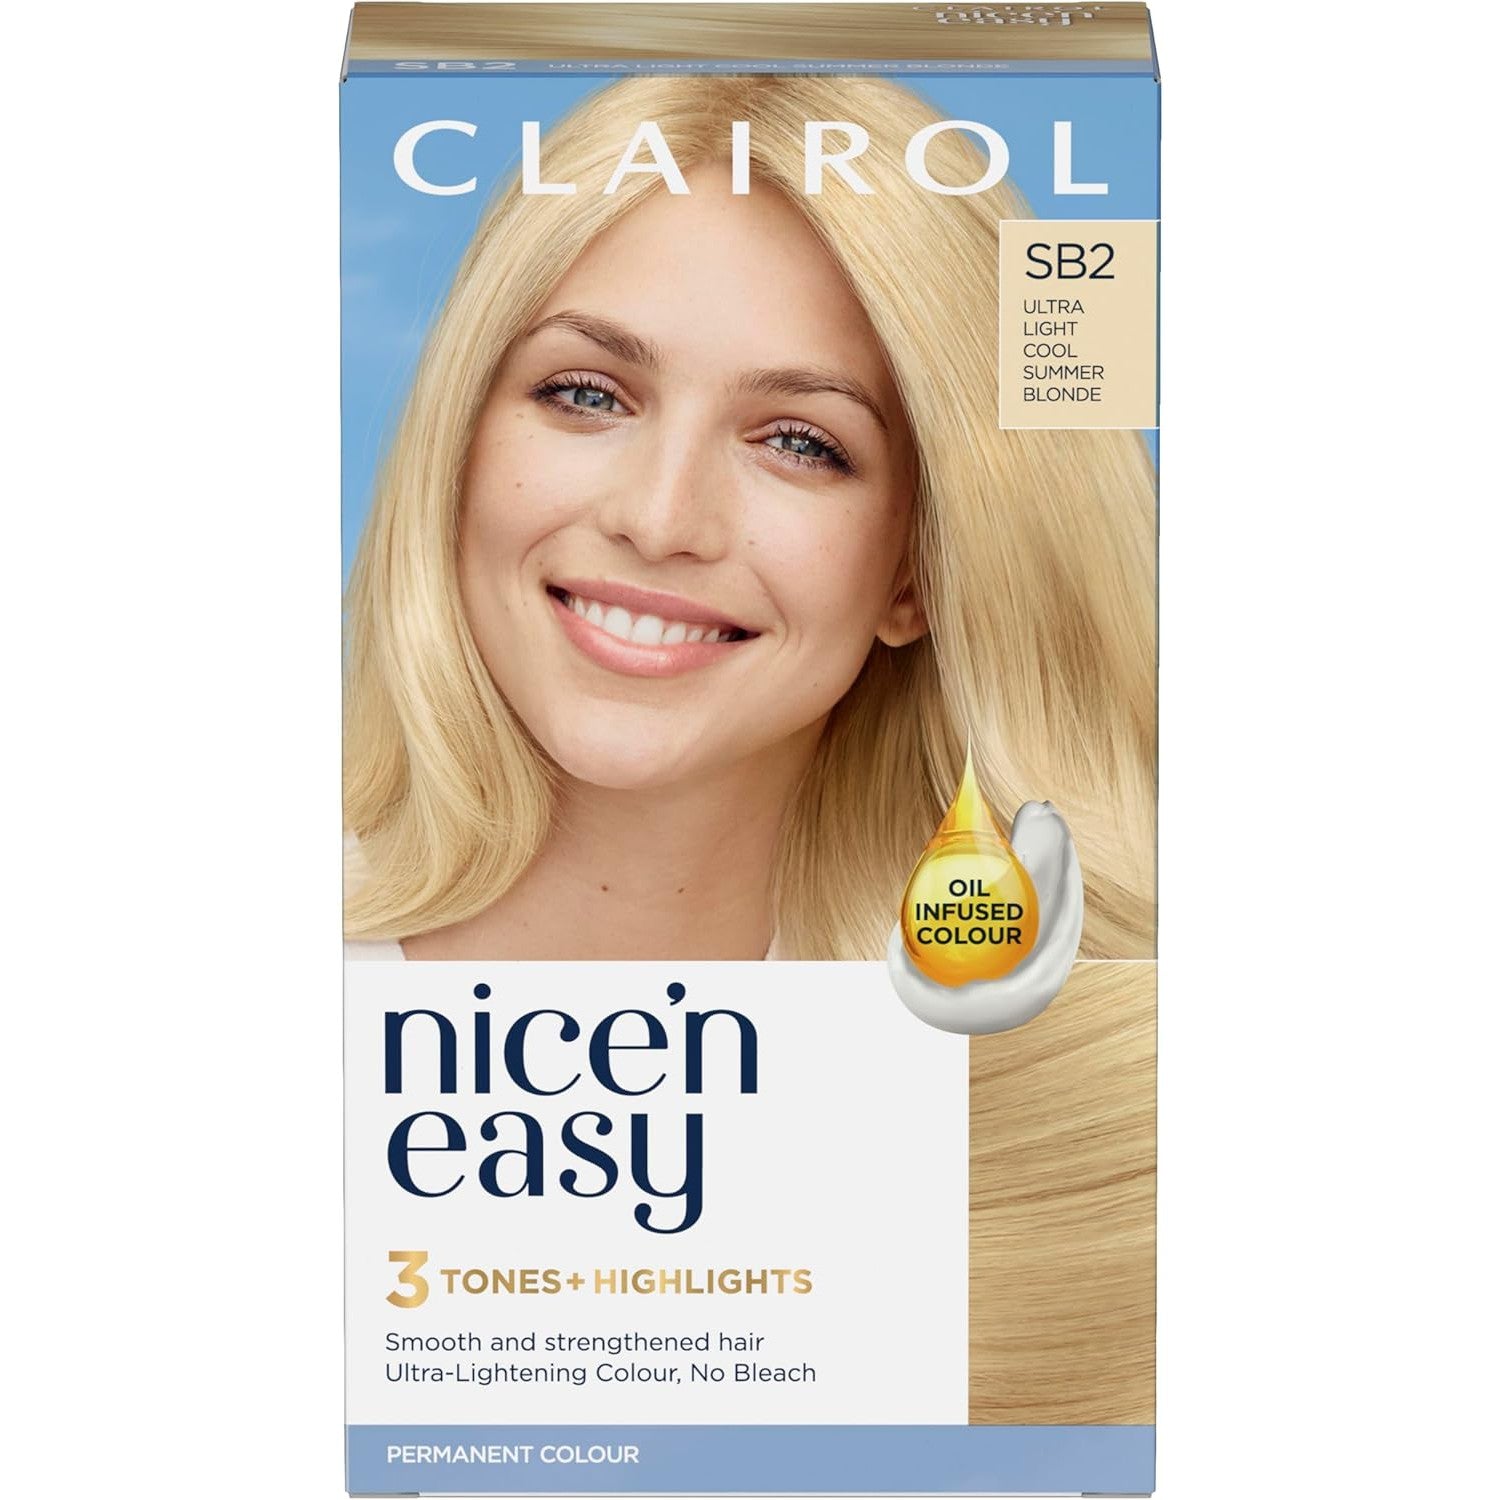 Clairol Nice'n Easy Crème, Permanent Hair Dye, SB2 Ultra Light Cool Summer Blonde